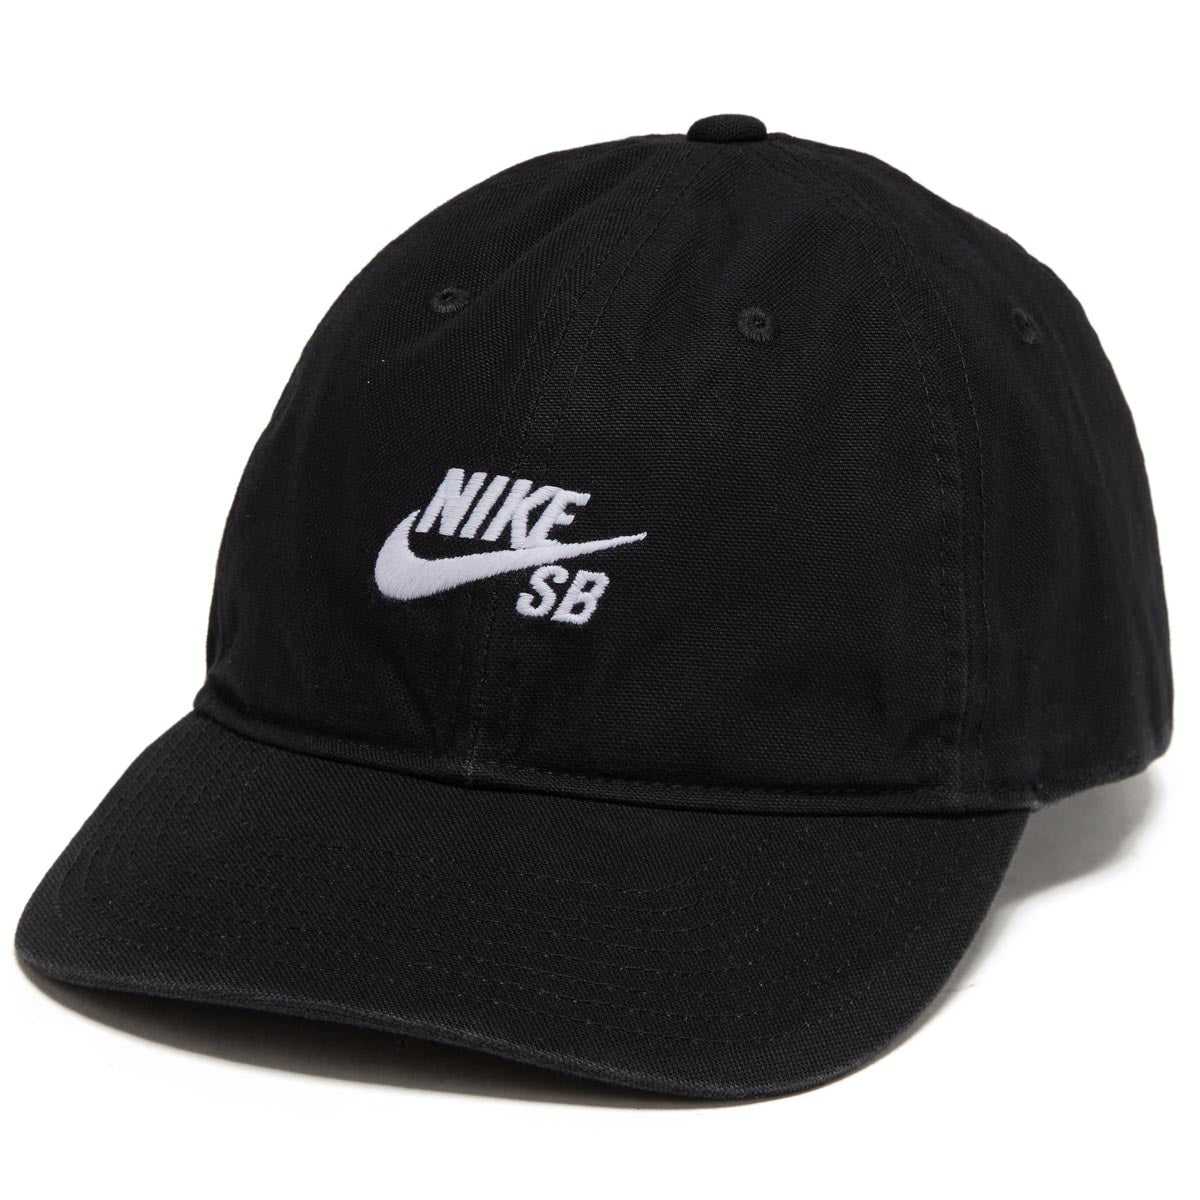 Nike SB Club Hat - Black/White image 1